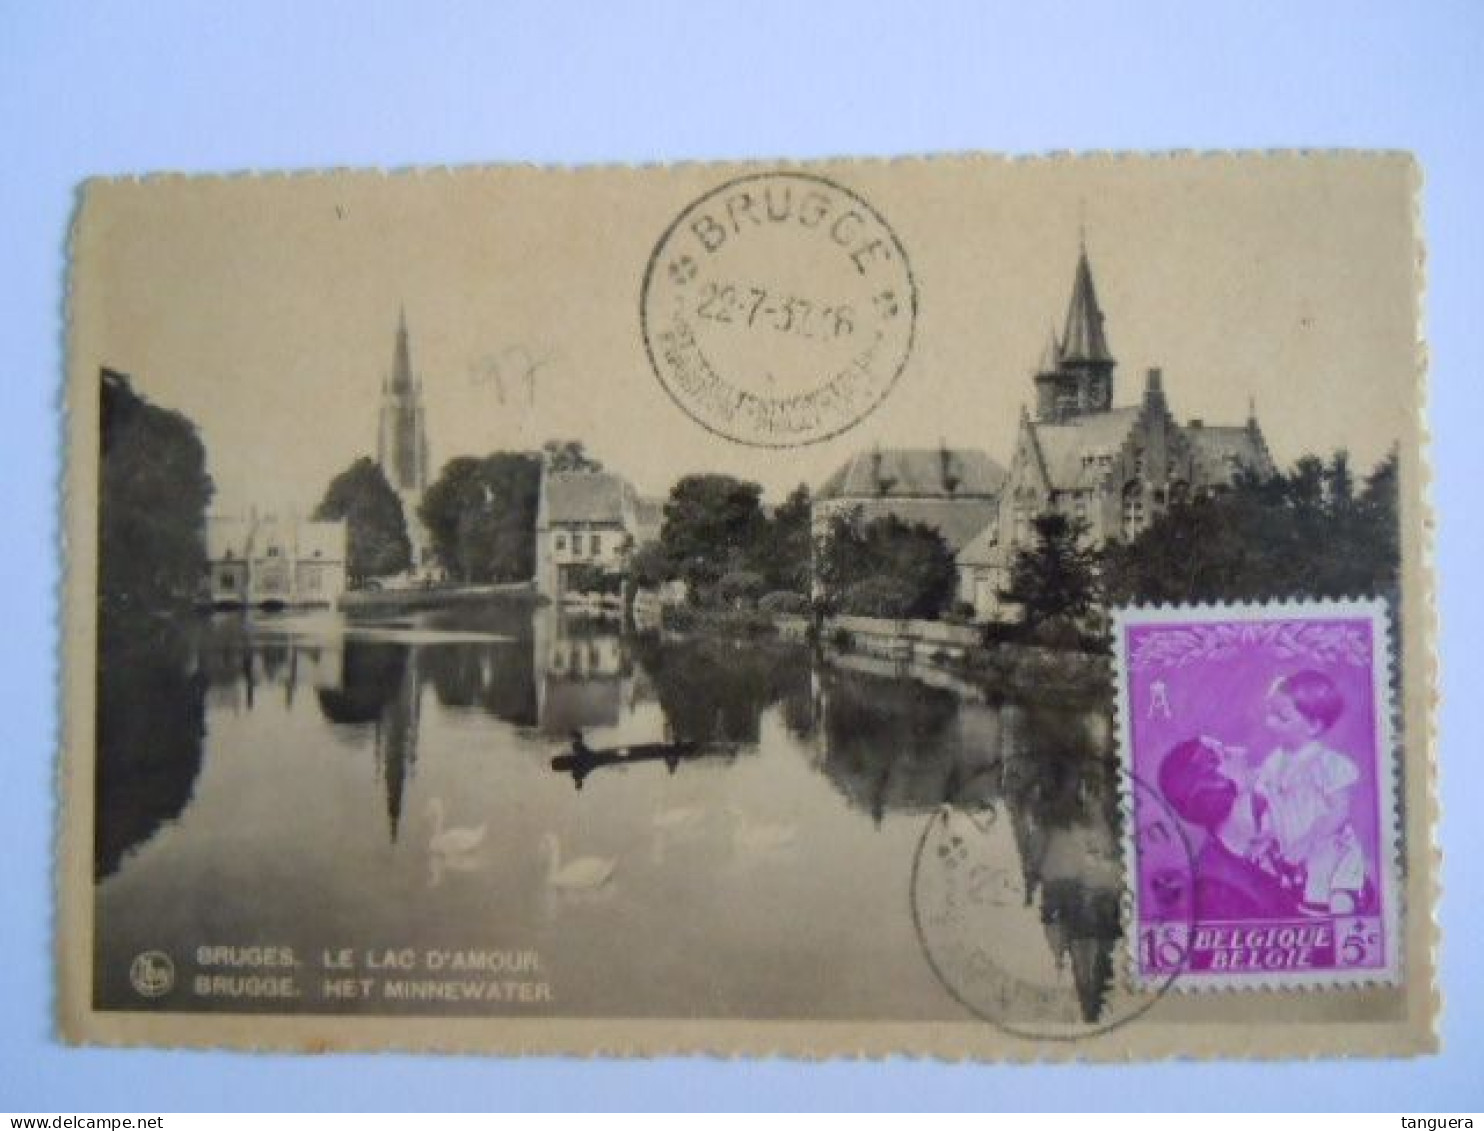 Belgie Reine Koningin Astrid 1937 Cob 447 Op Sur Cp Brugge Le Lac D'amour Het Minnewater (703) - Briefe U. Dokumente